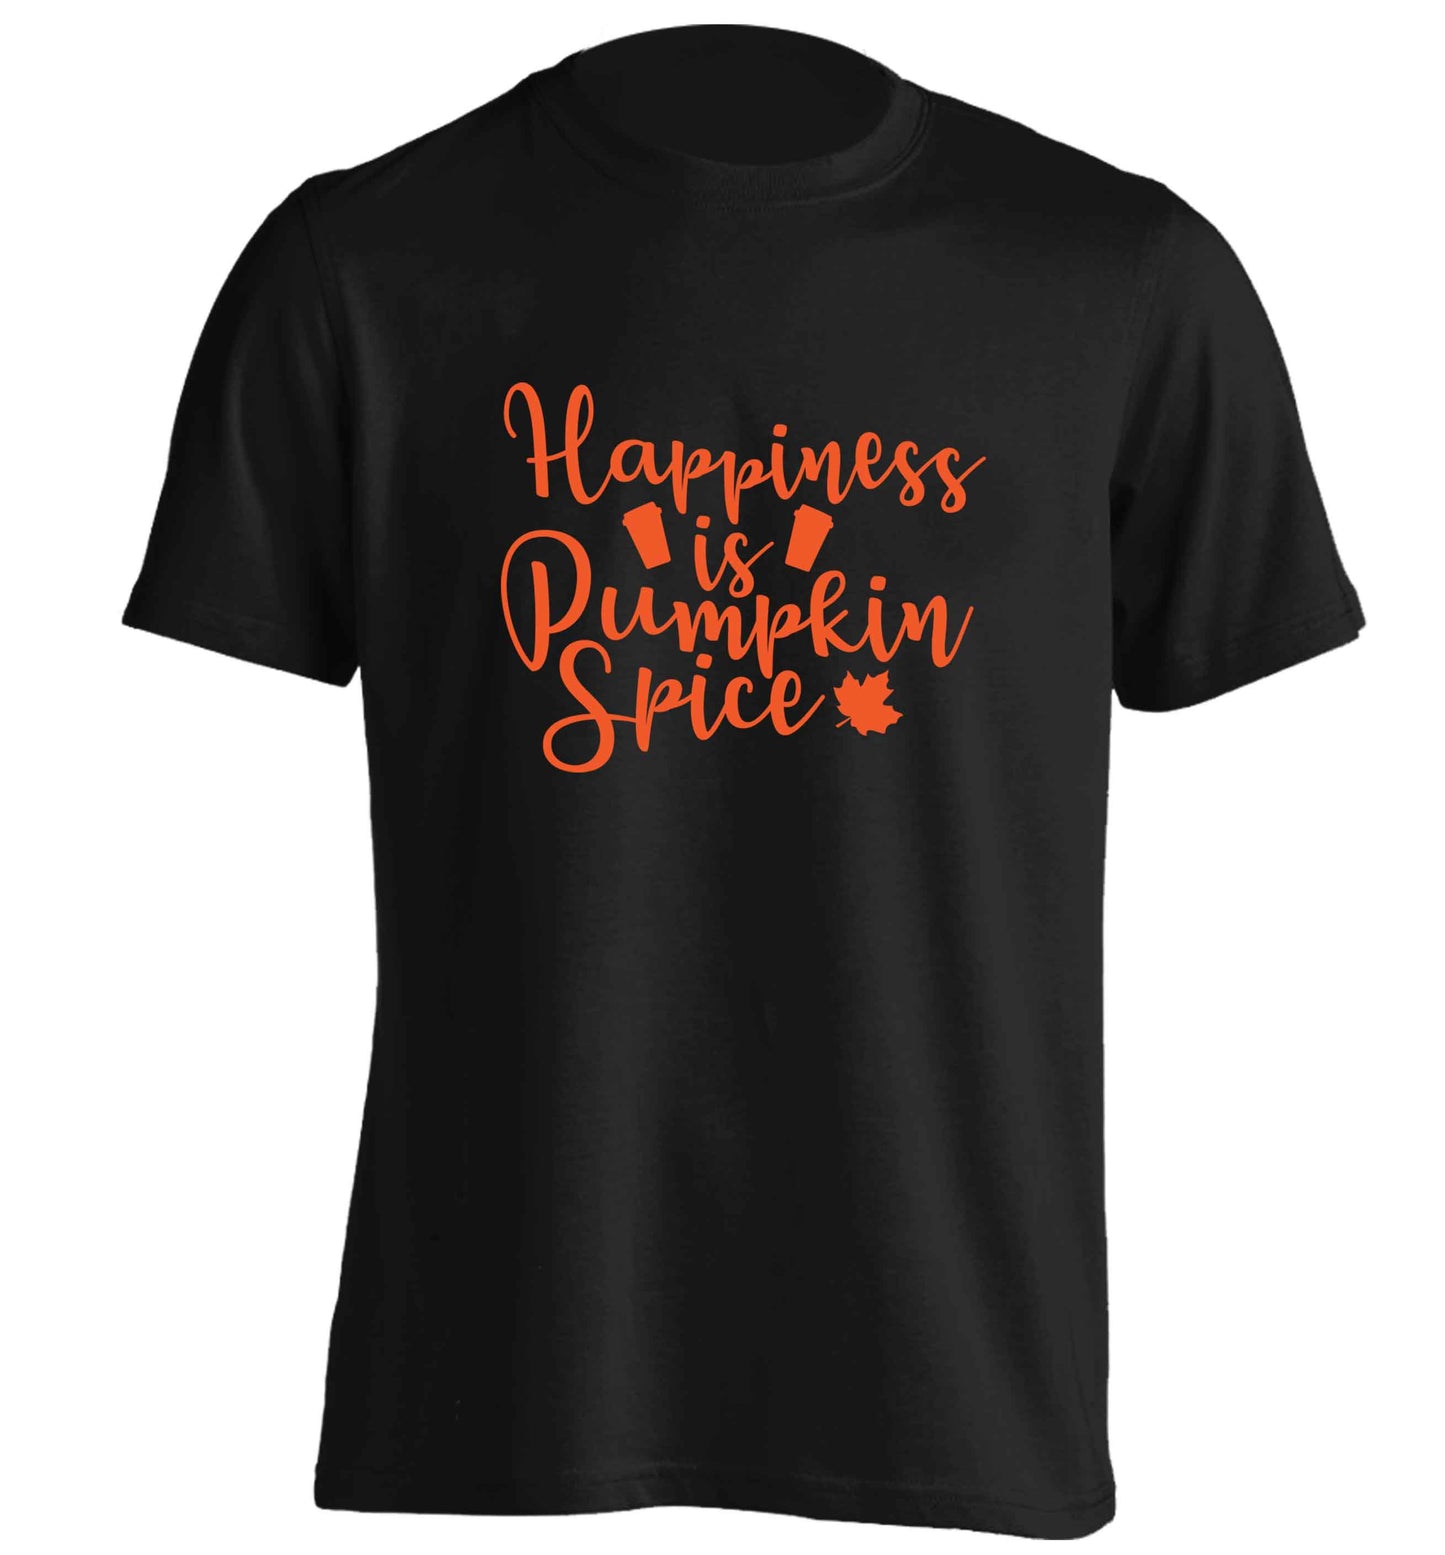 Happiness Pumpkin Spice adults unisex black Tshirt 2XL